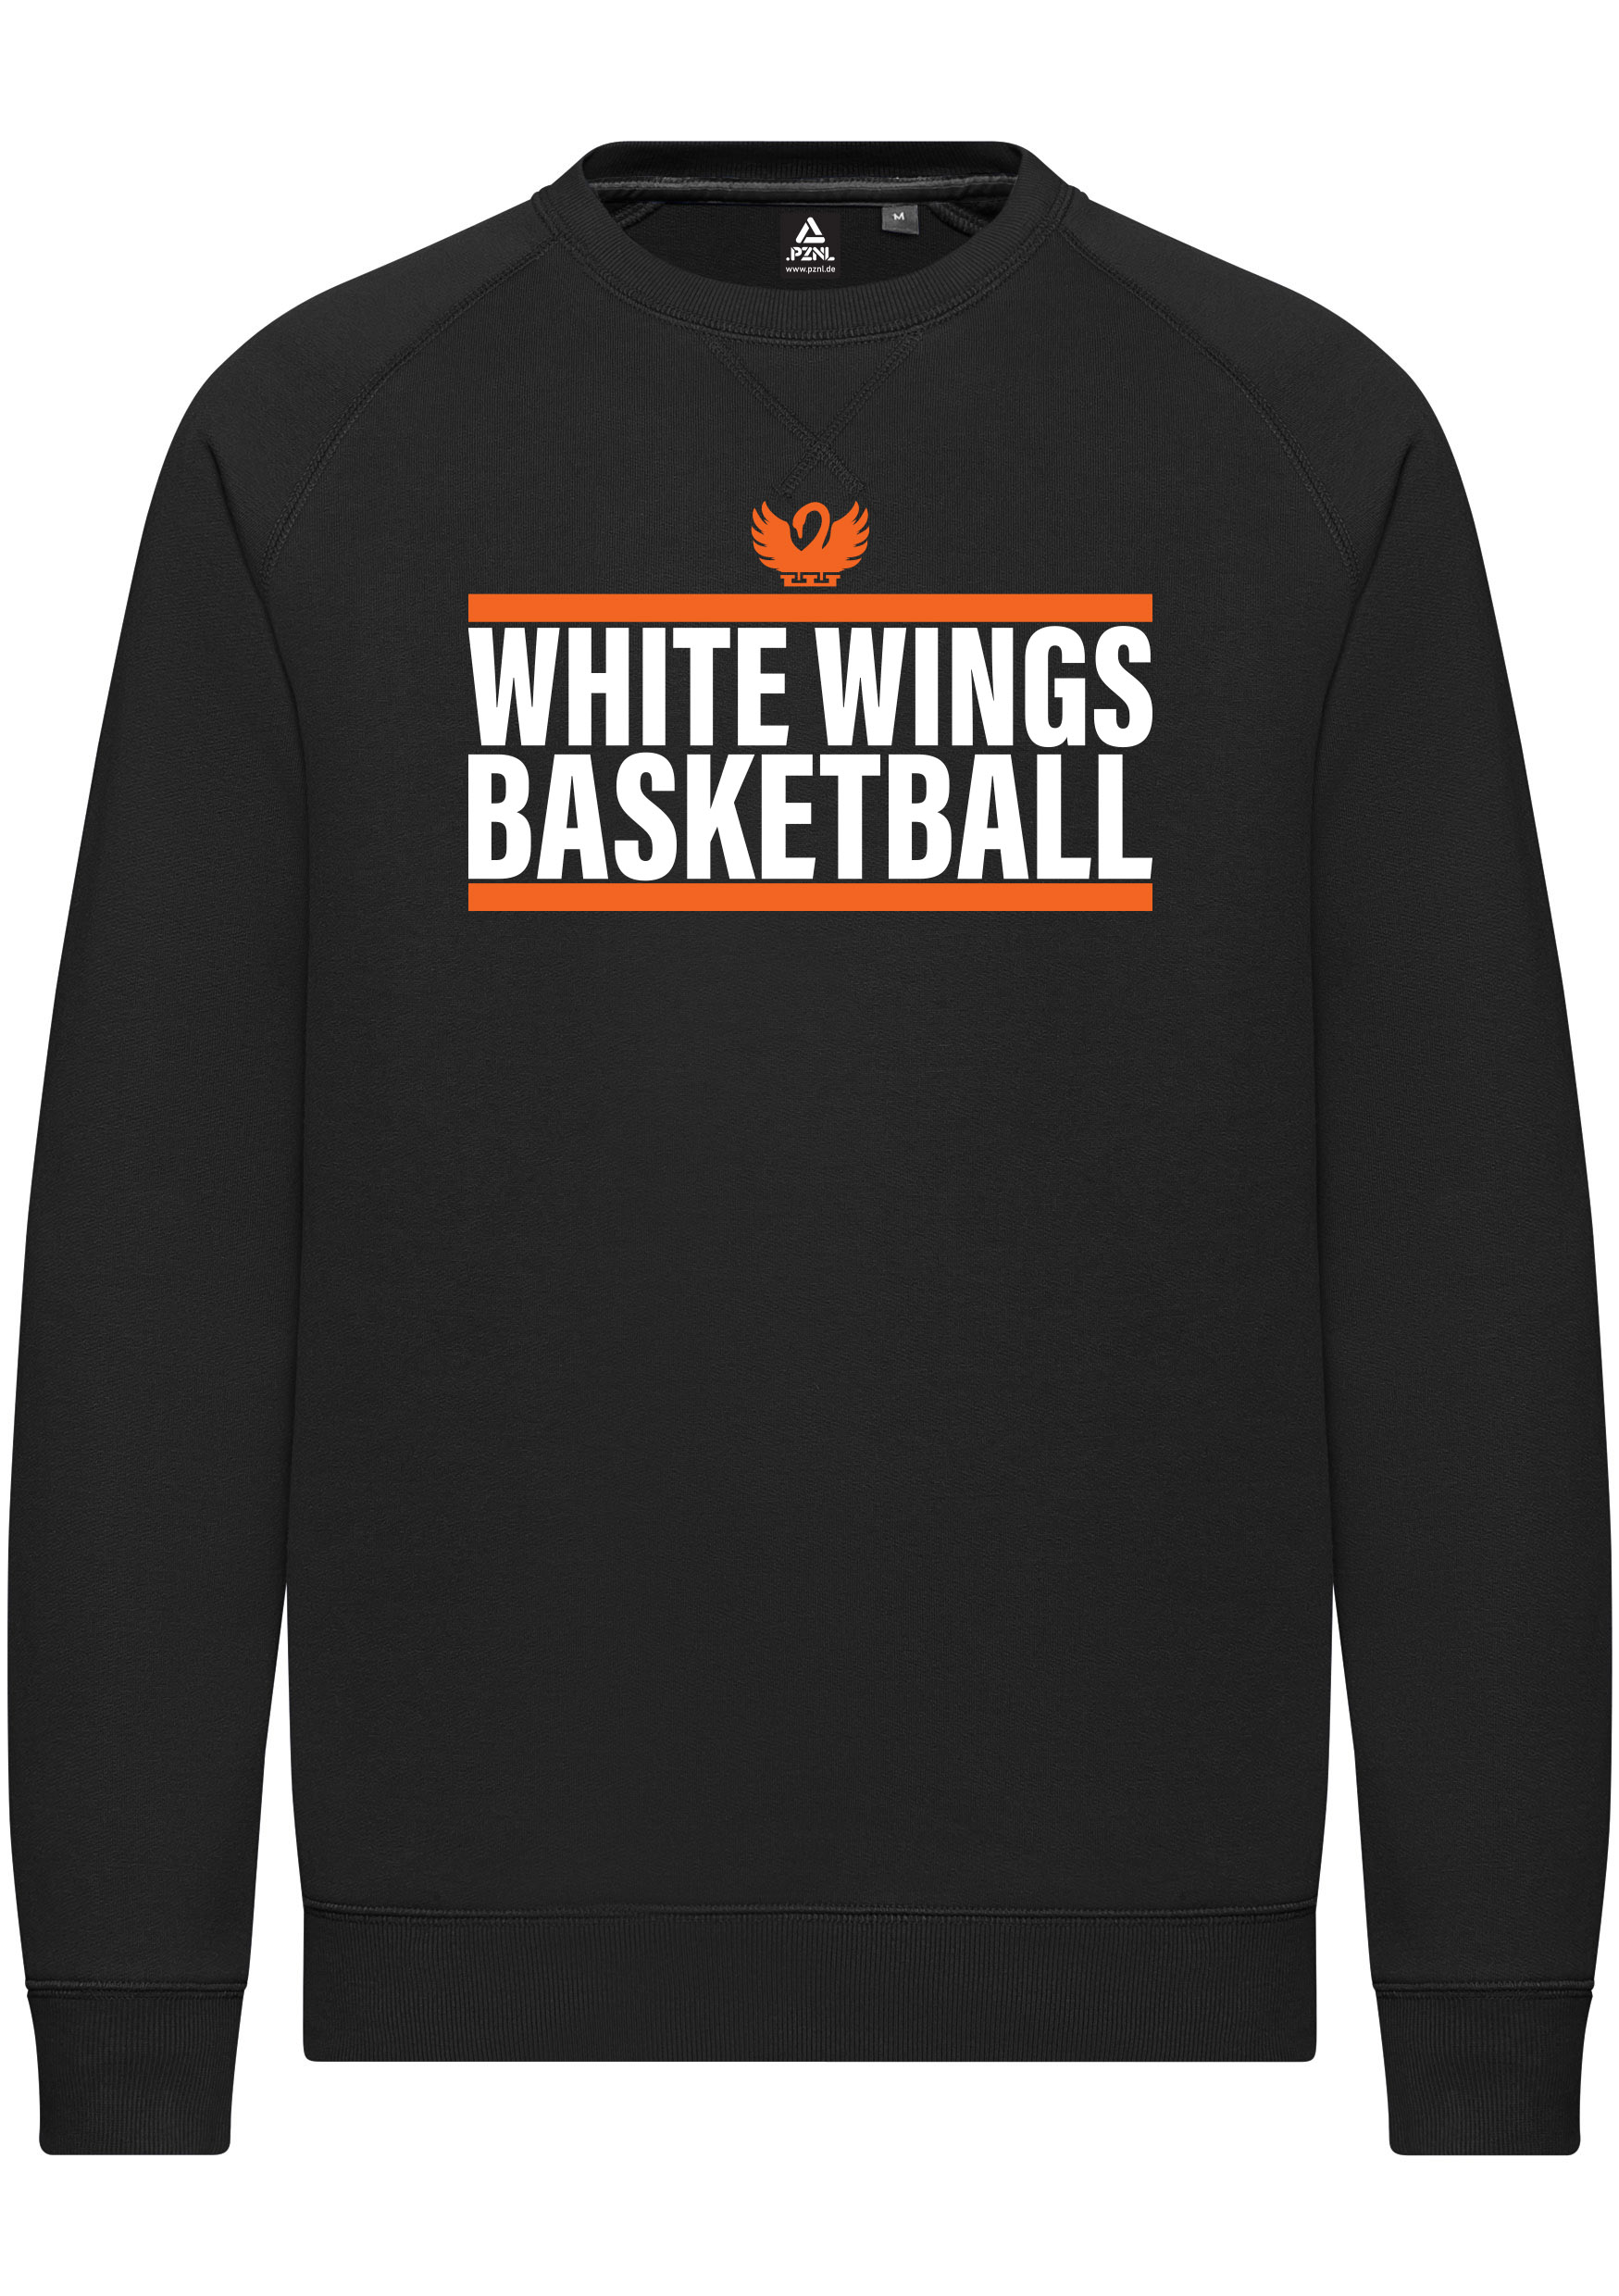 WhiteWings Basketball Basic Sweatshirt